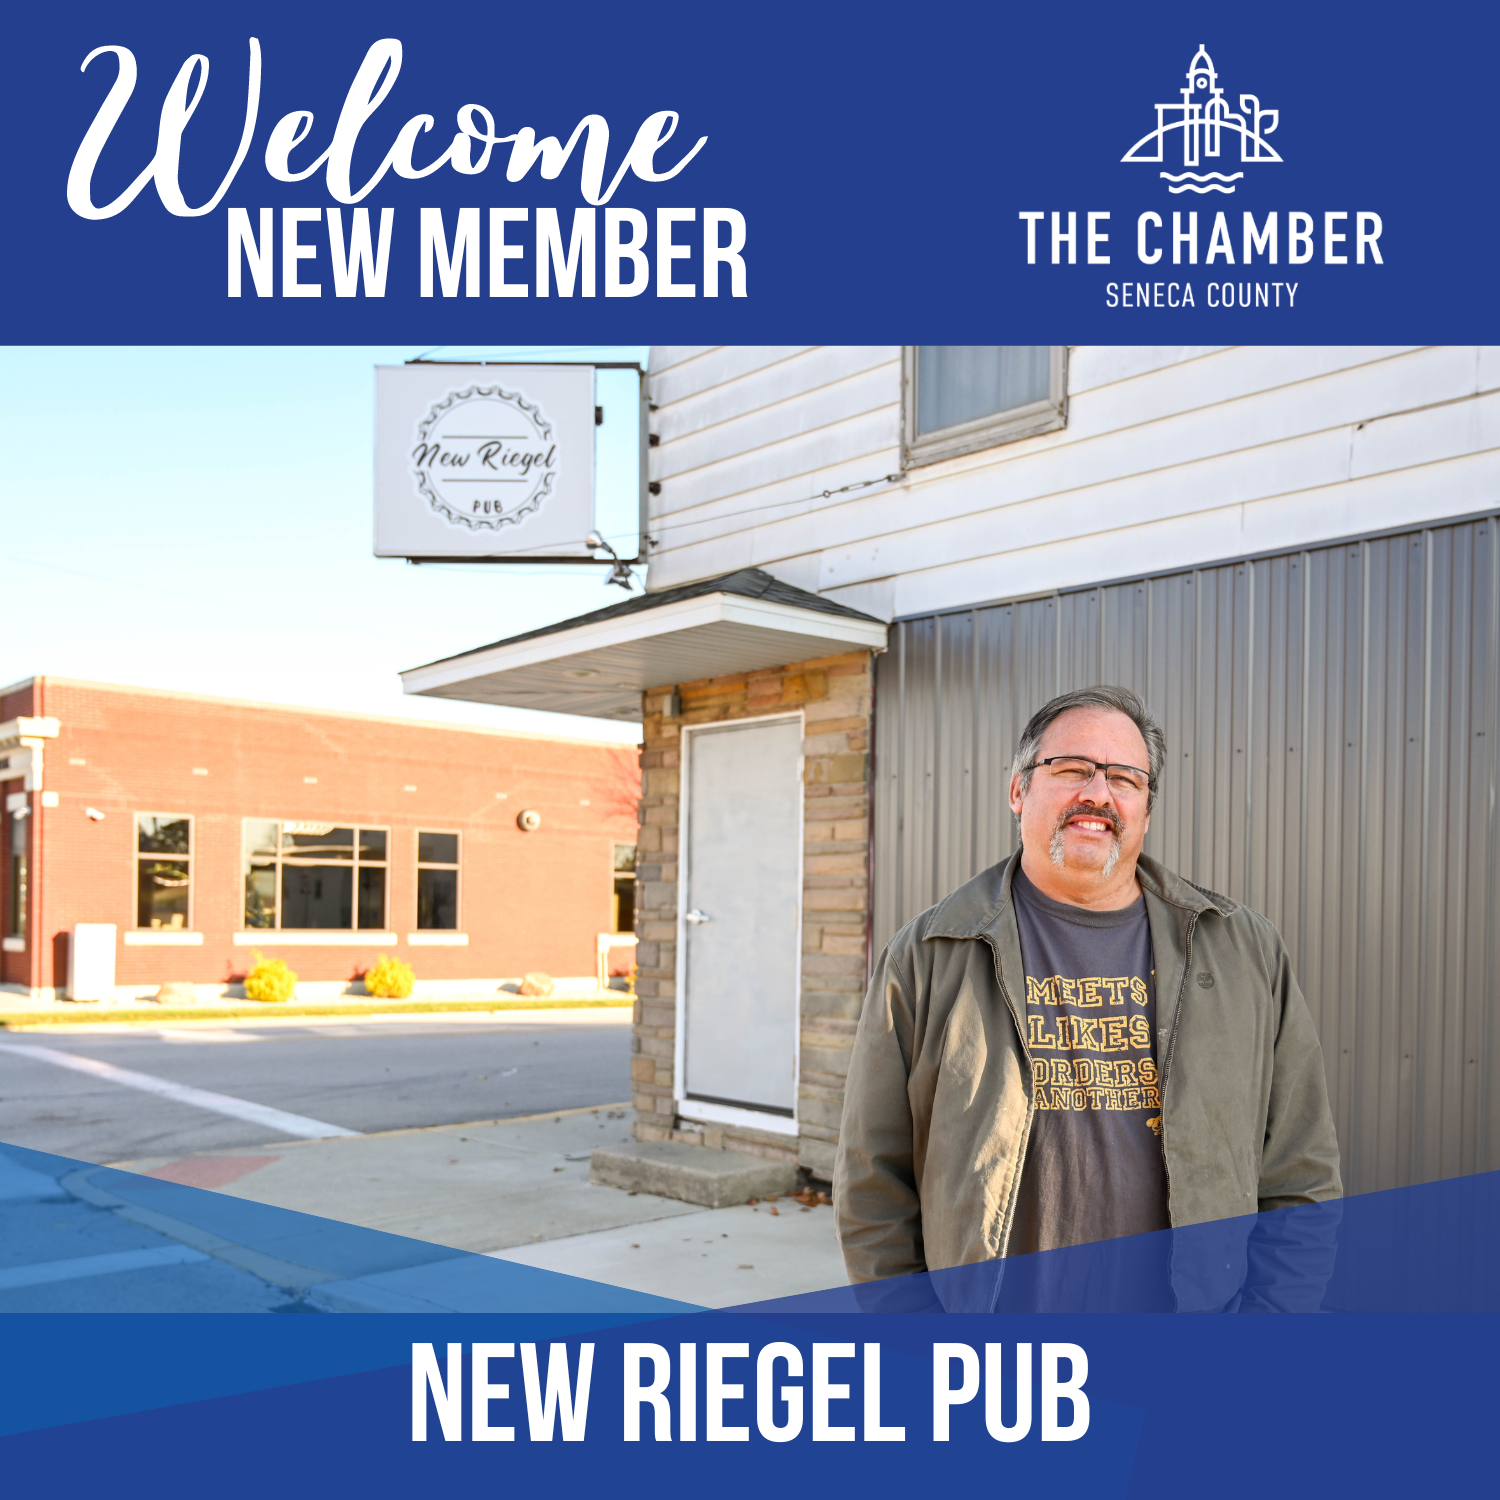 New Member: New Riegel Pub